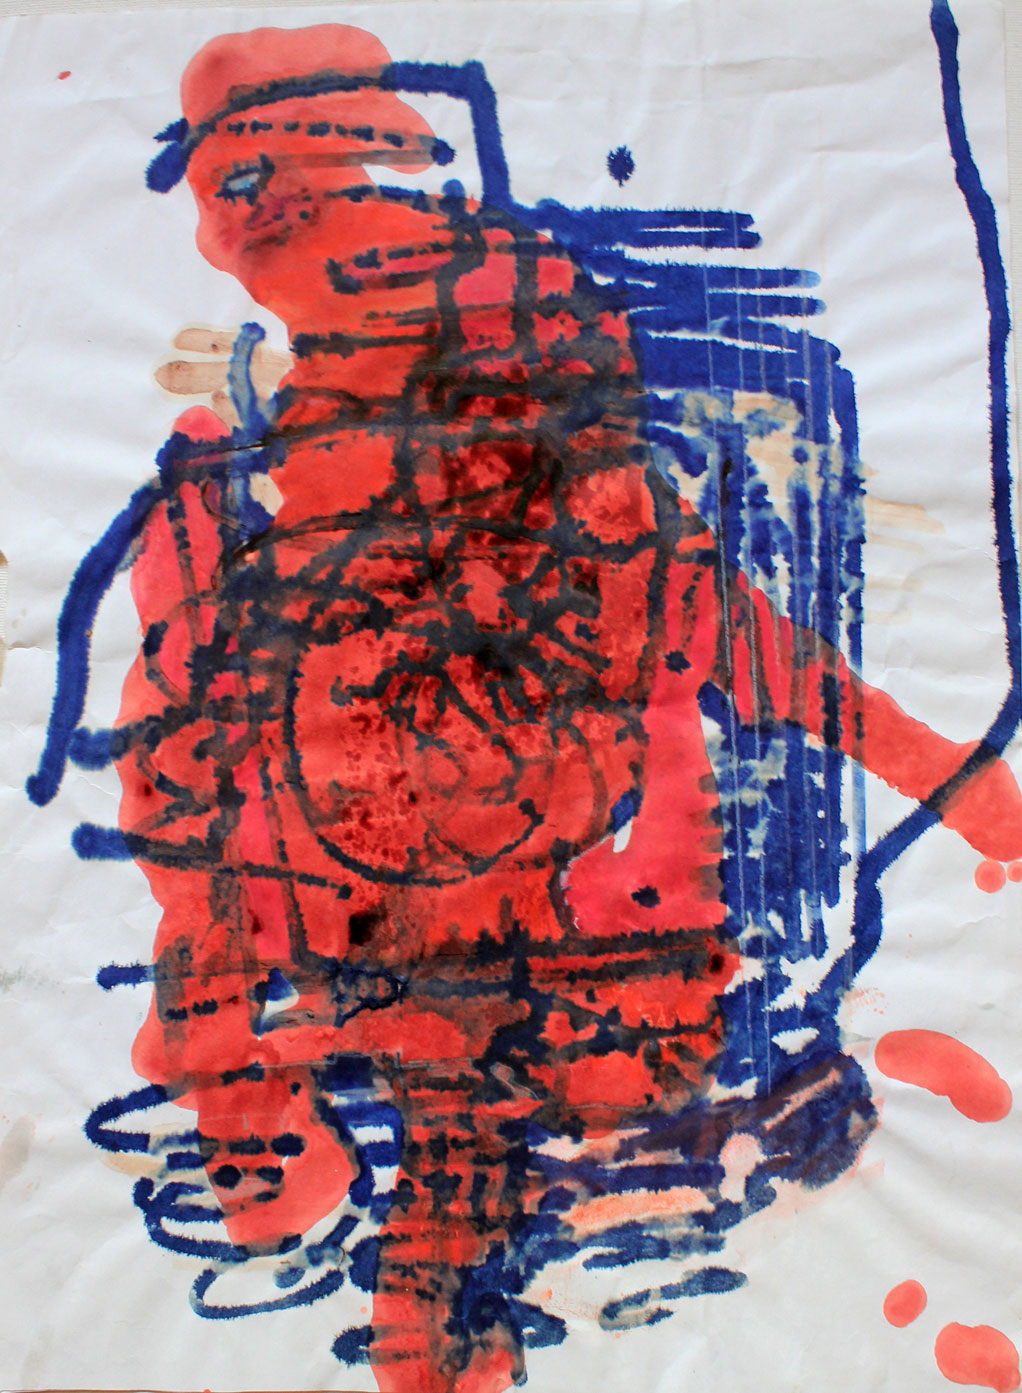 Fish Man II (study) 420x297mm Colored ink